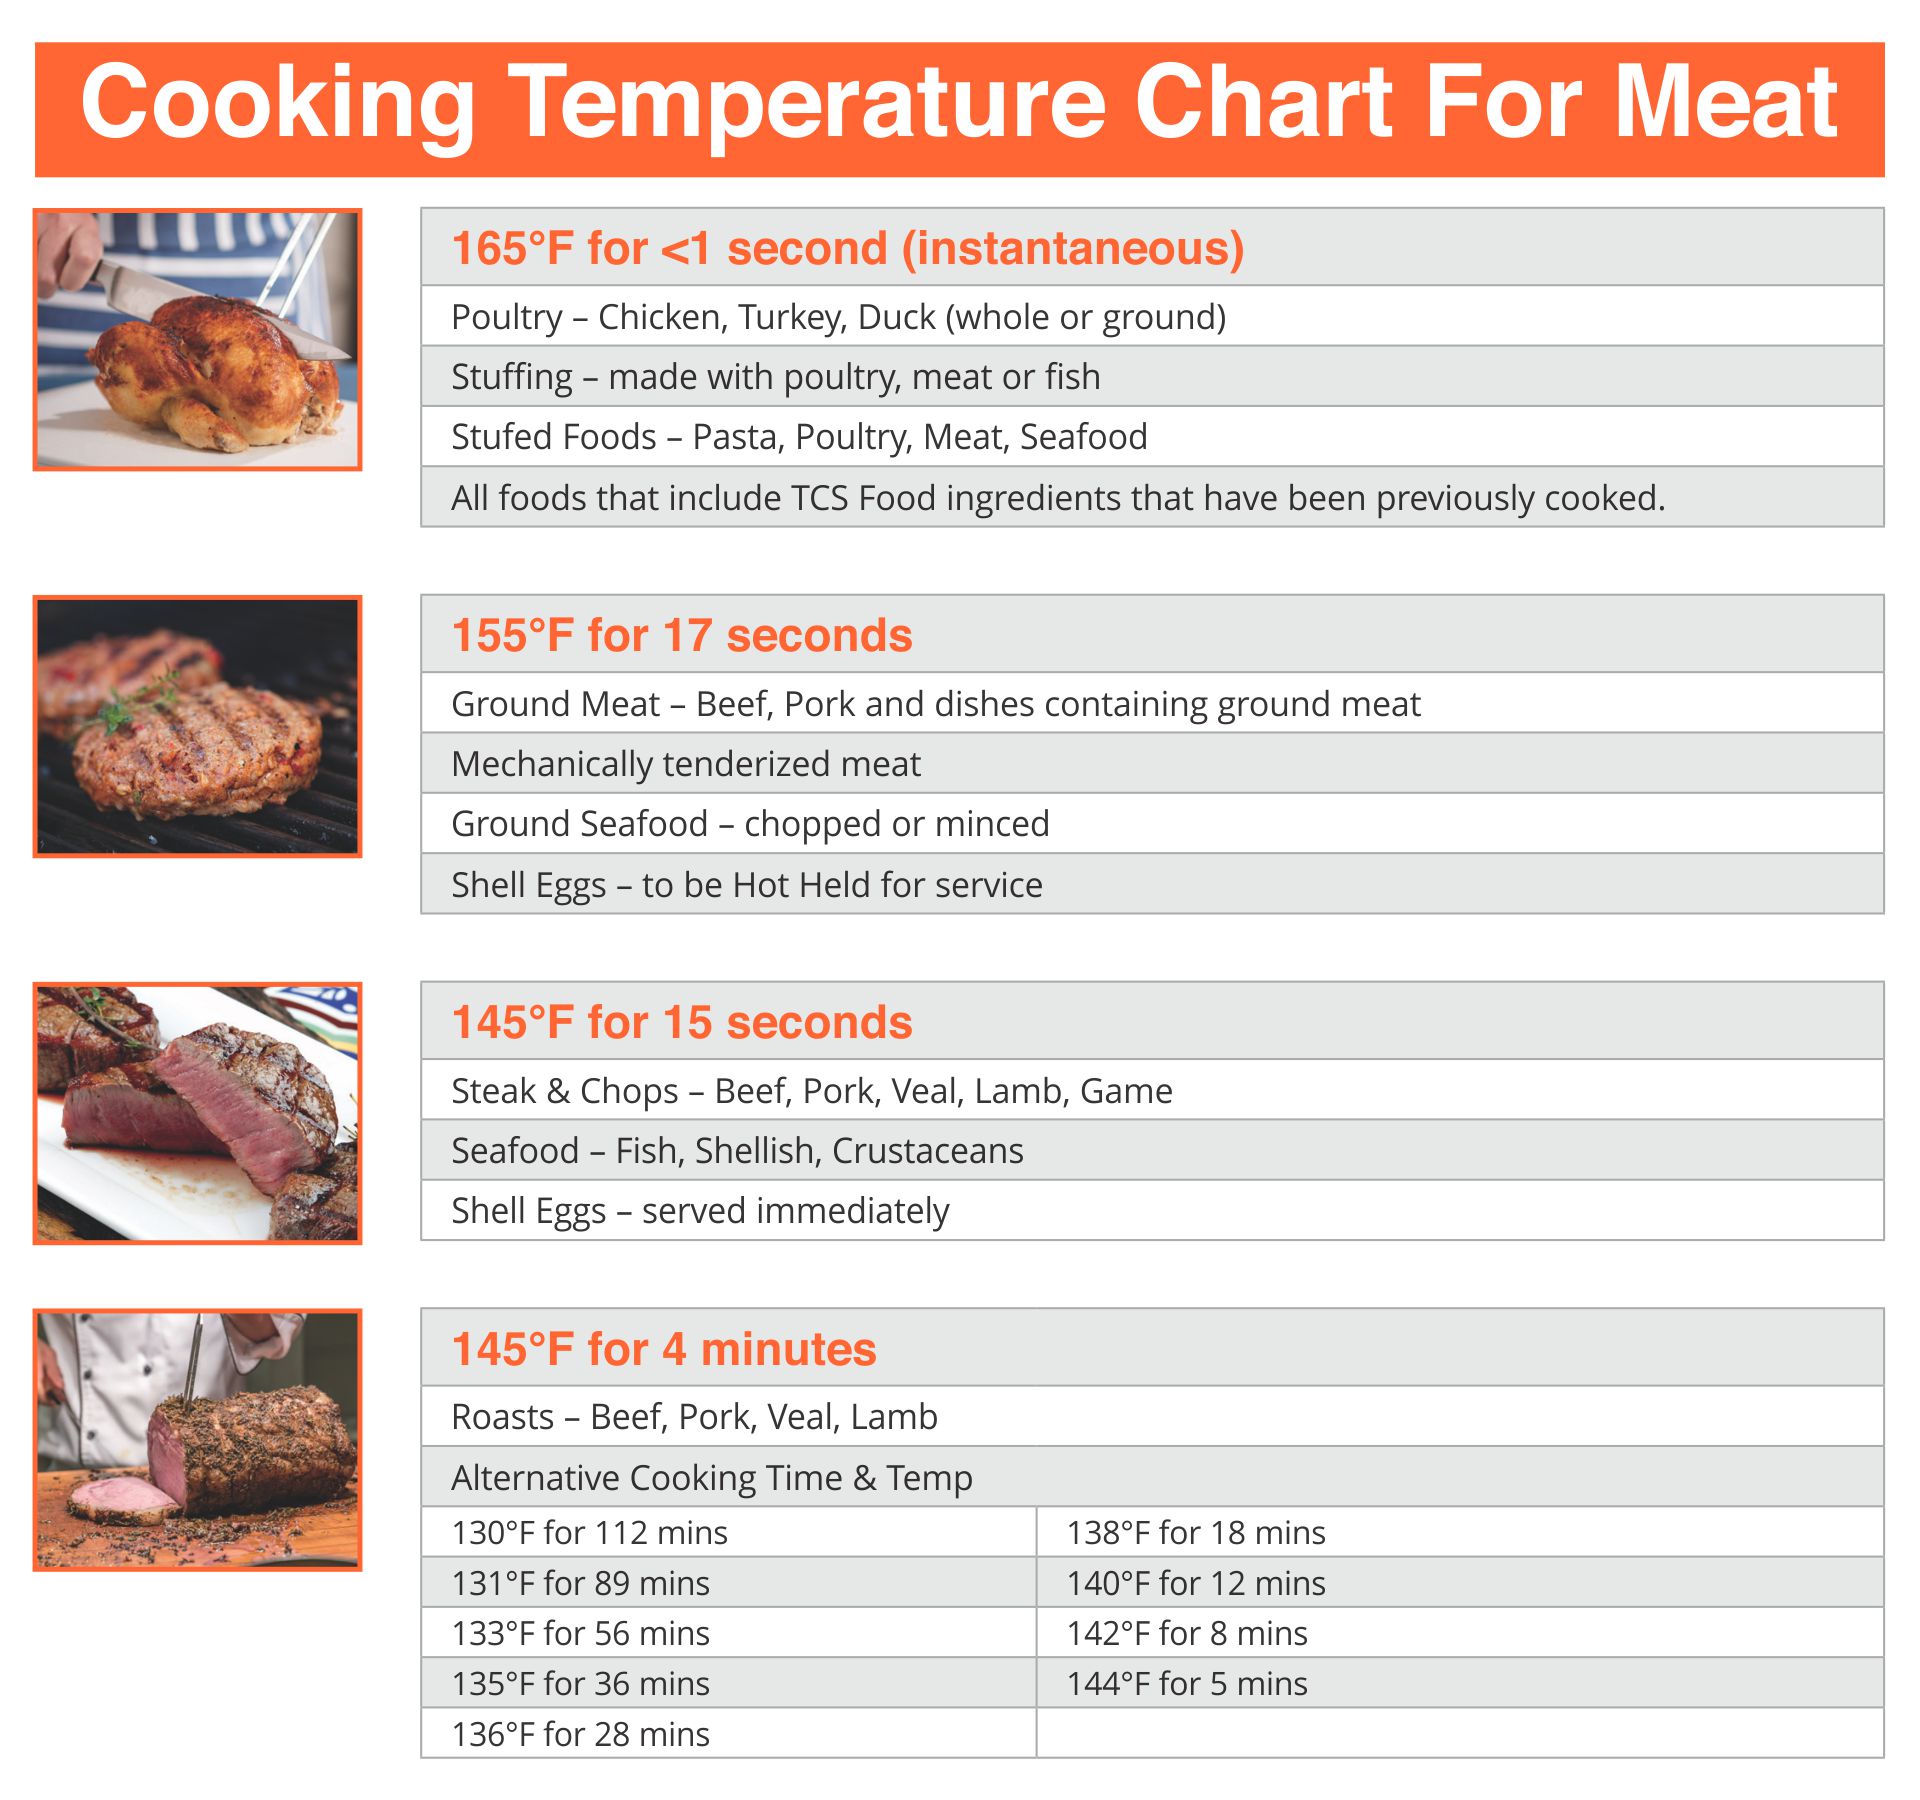 meat-temperature-magnet-guide-ubicaciondepersonas-cdmx-gob-mx